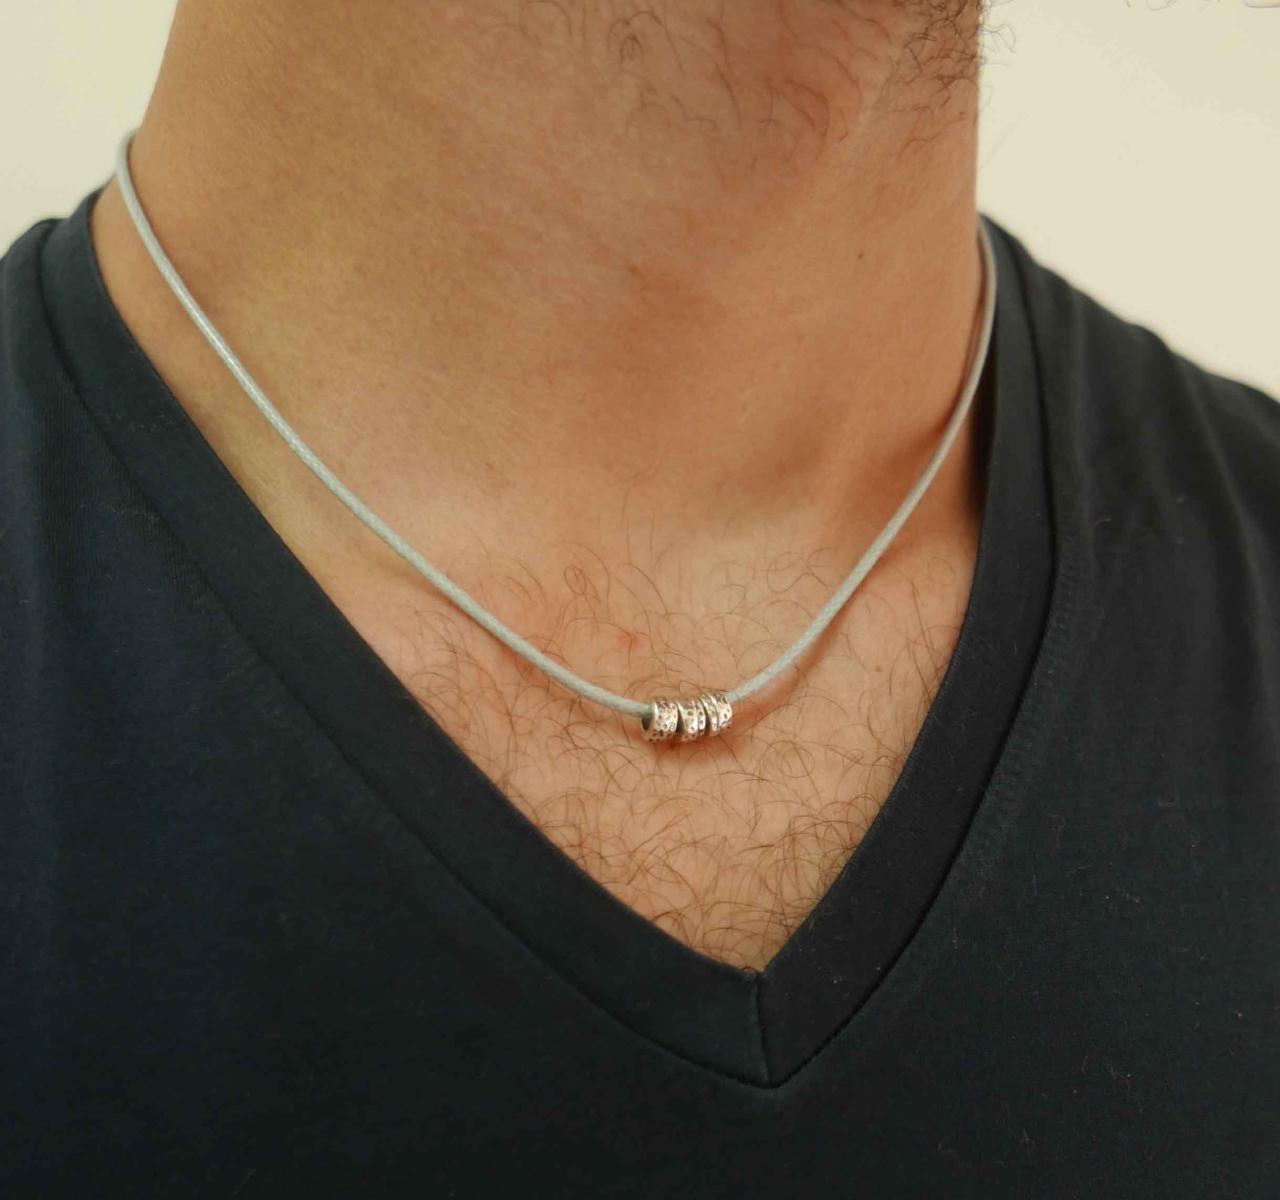 Men's Necklace - Men's Silver Necklace - Men's Beaded Necklace - Men's Jewelry - Men's Gift -